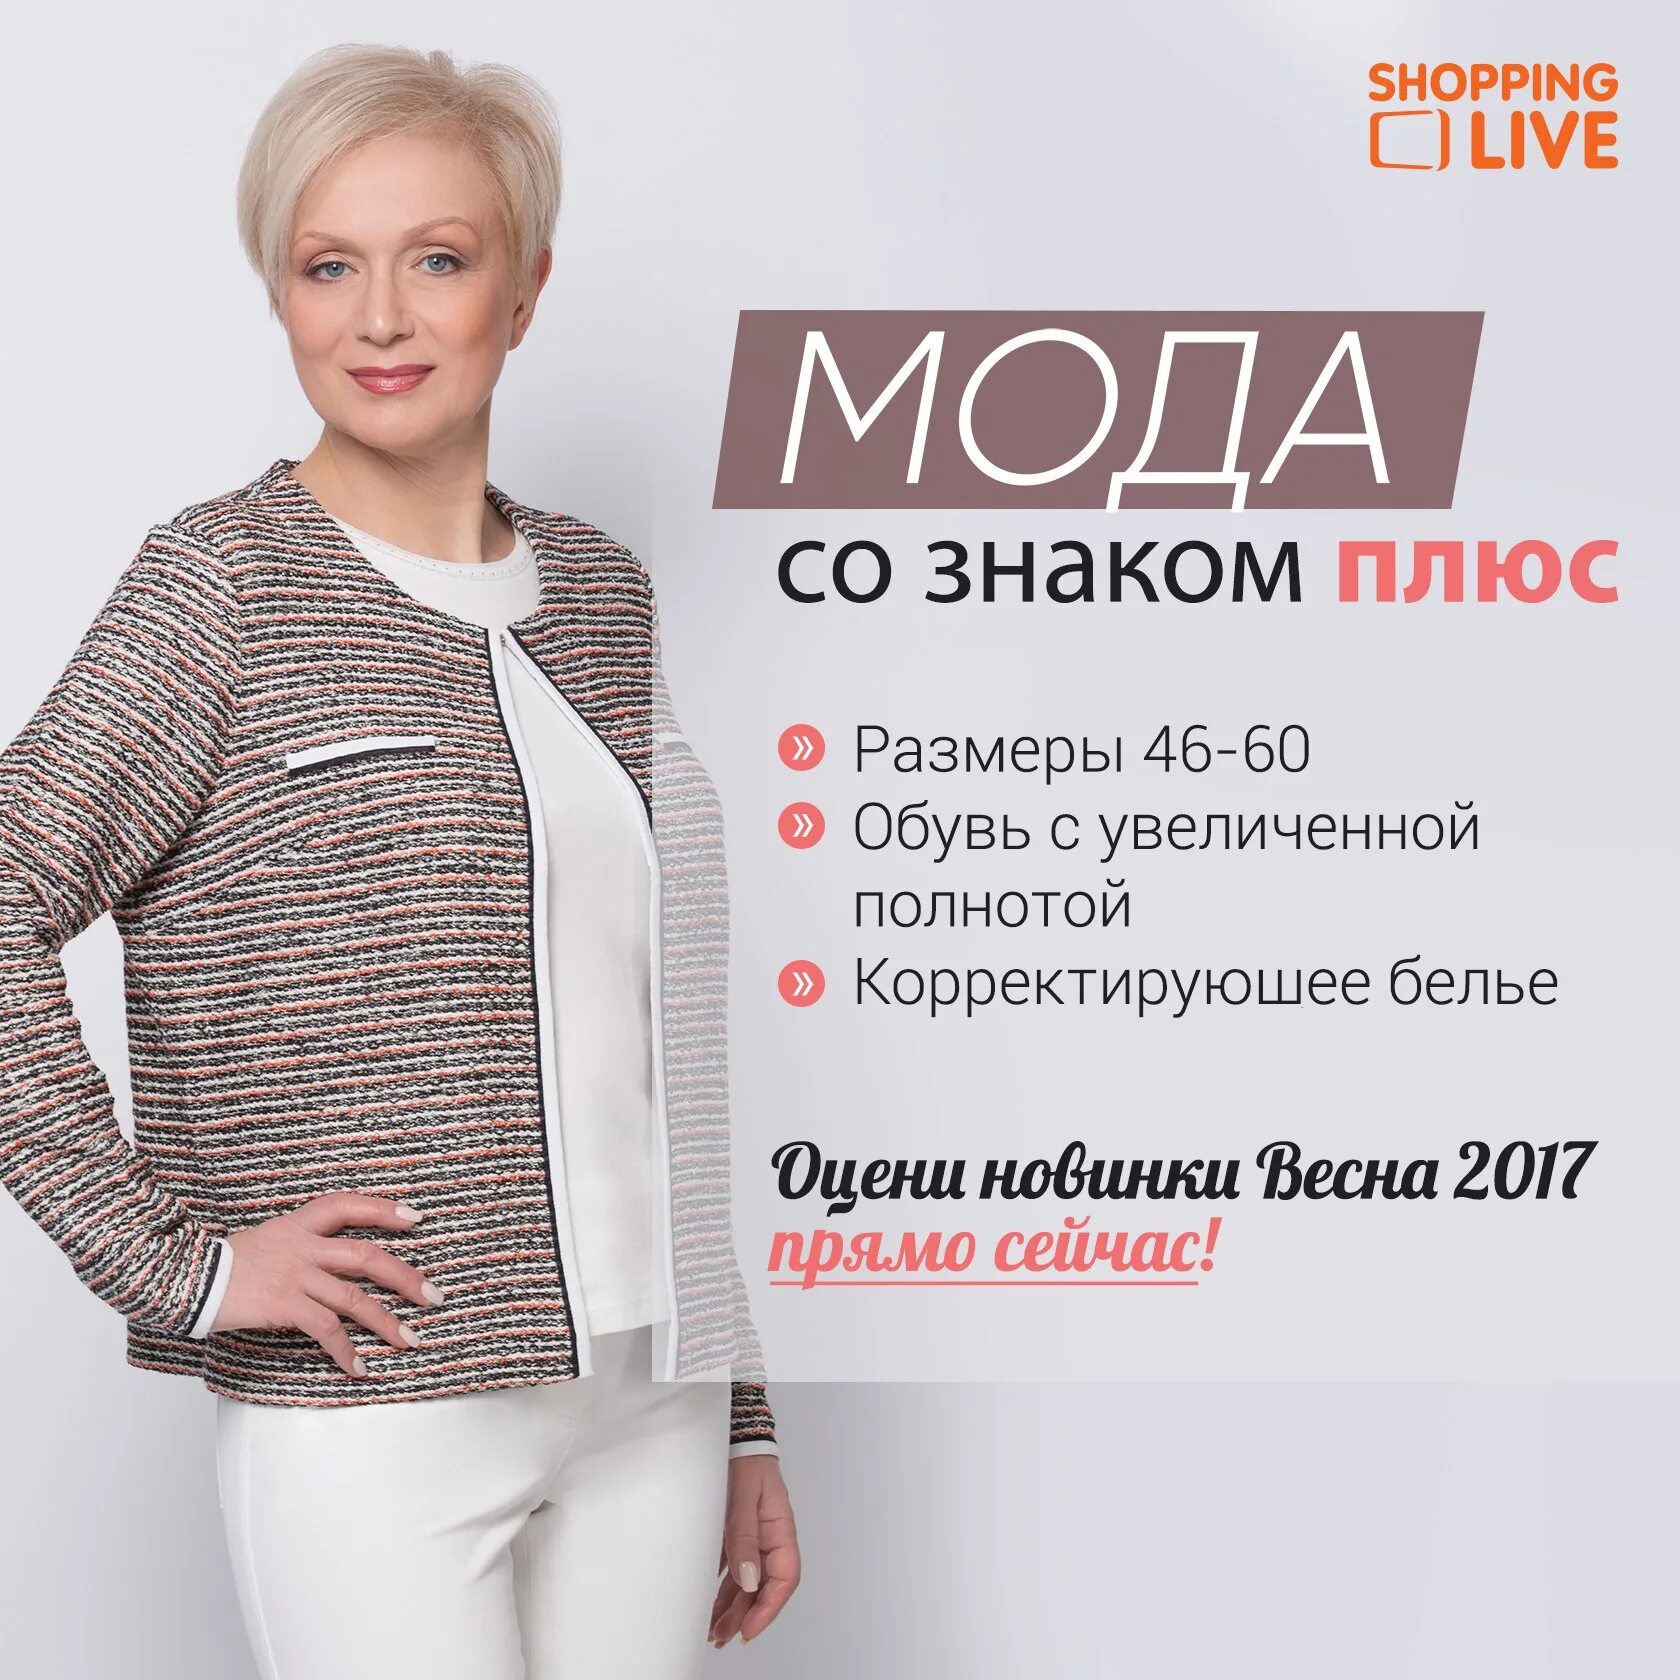 Shopping Live интернет-магазин. Shopping Live интернет магазин каталог. SHOPPINGLIVE.ru интернет магазин. Каталог одежды. Shopping интернет магазин телемагазин